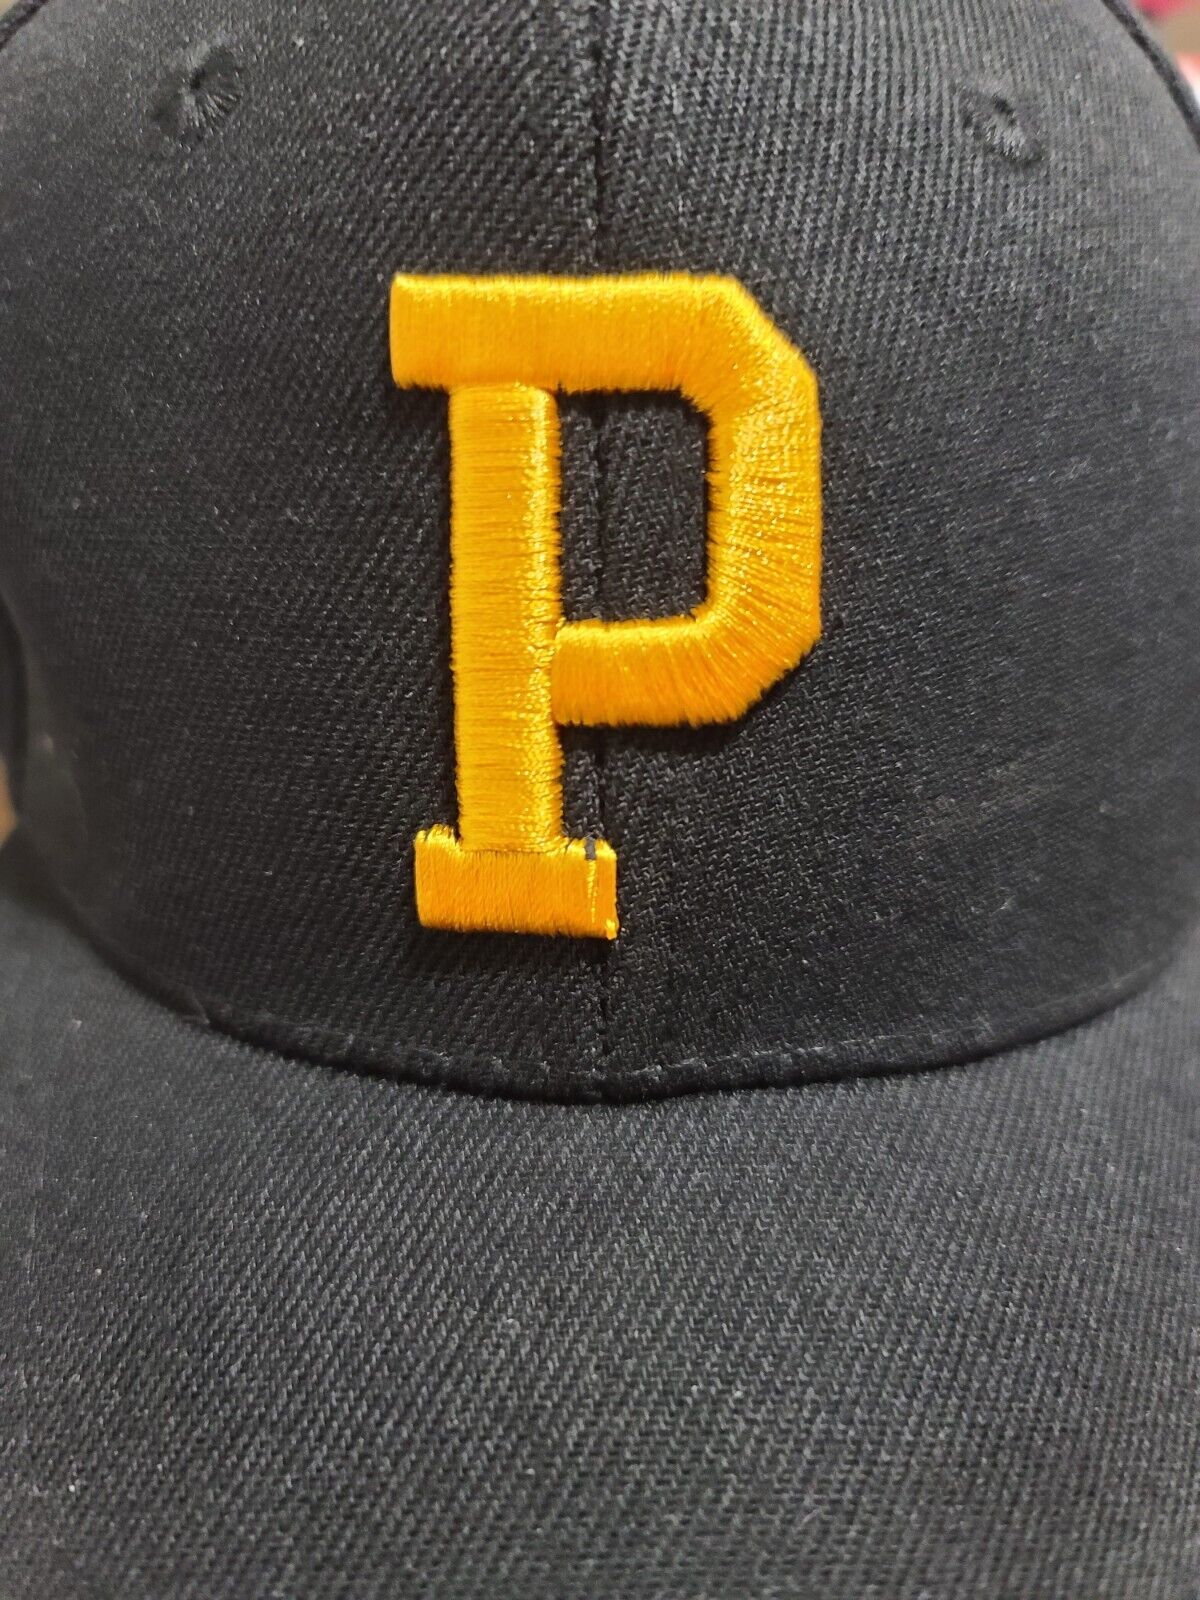 Casquette de baseball des Pirates de Pittsburgh.